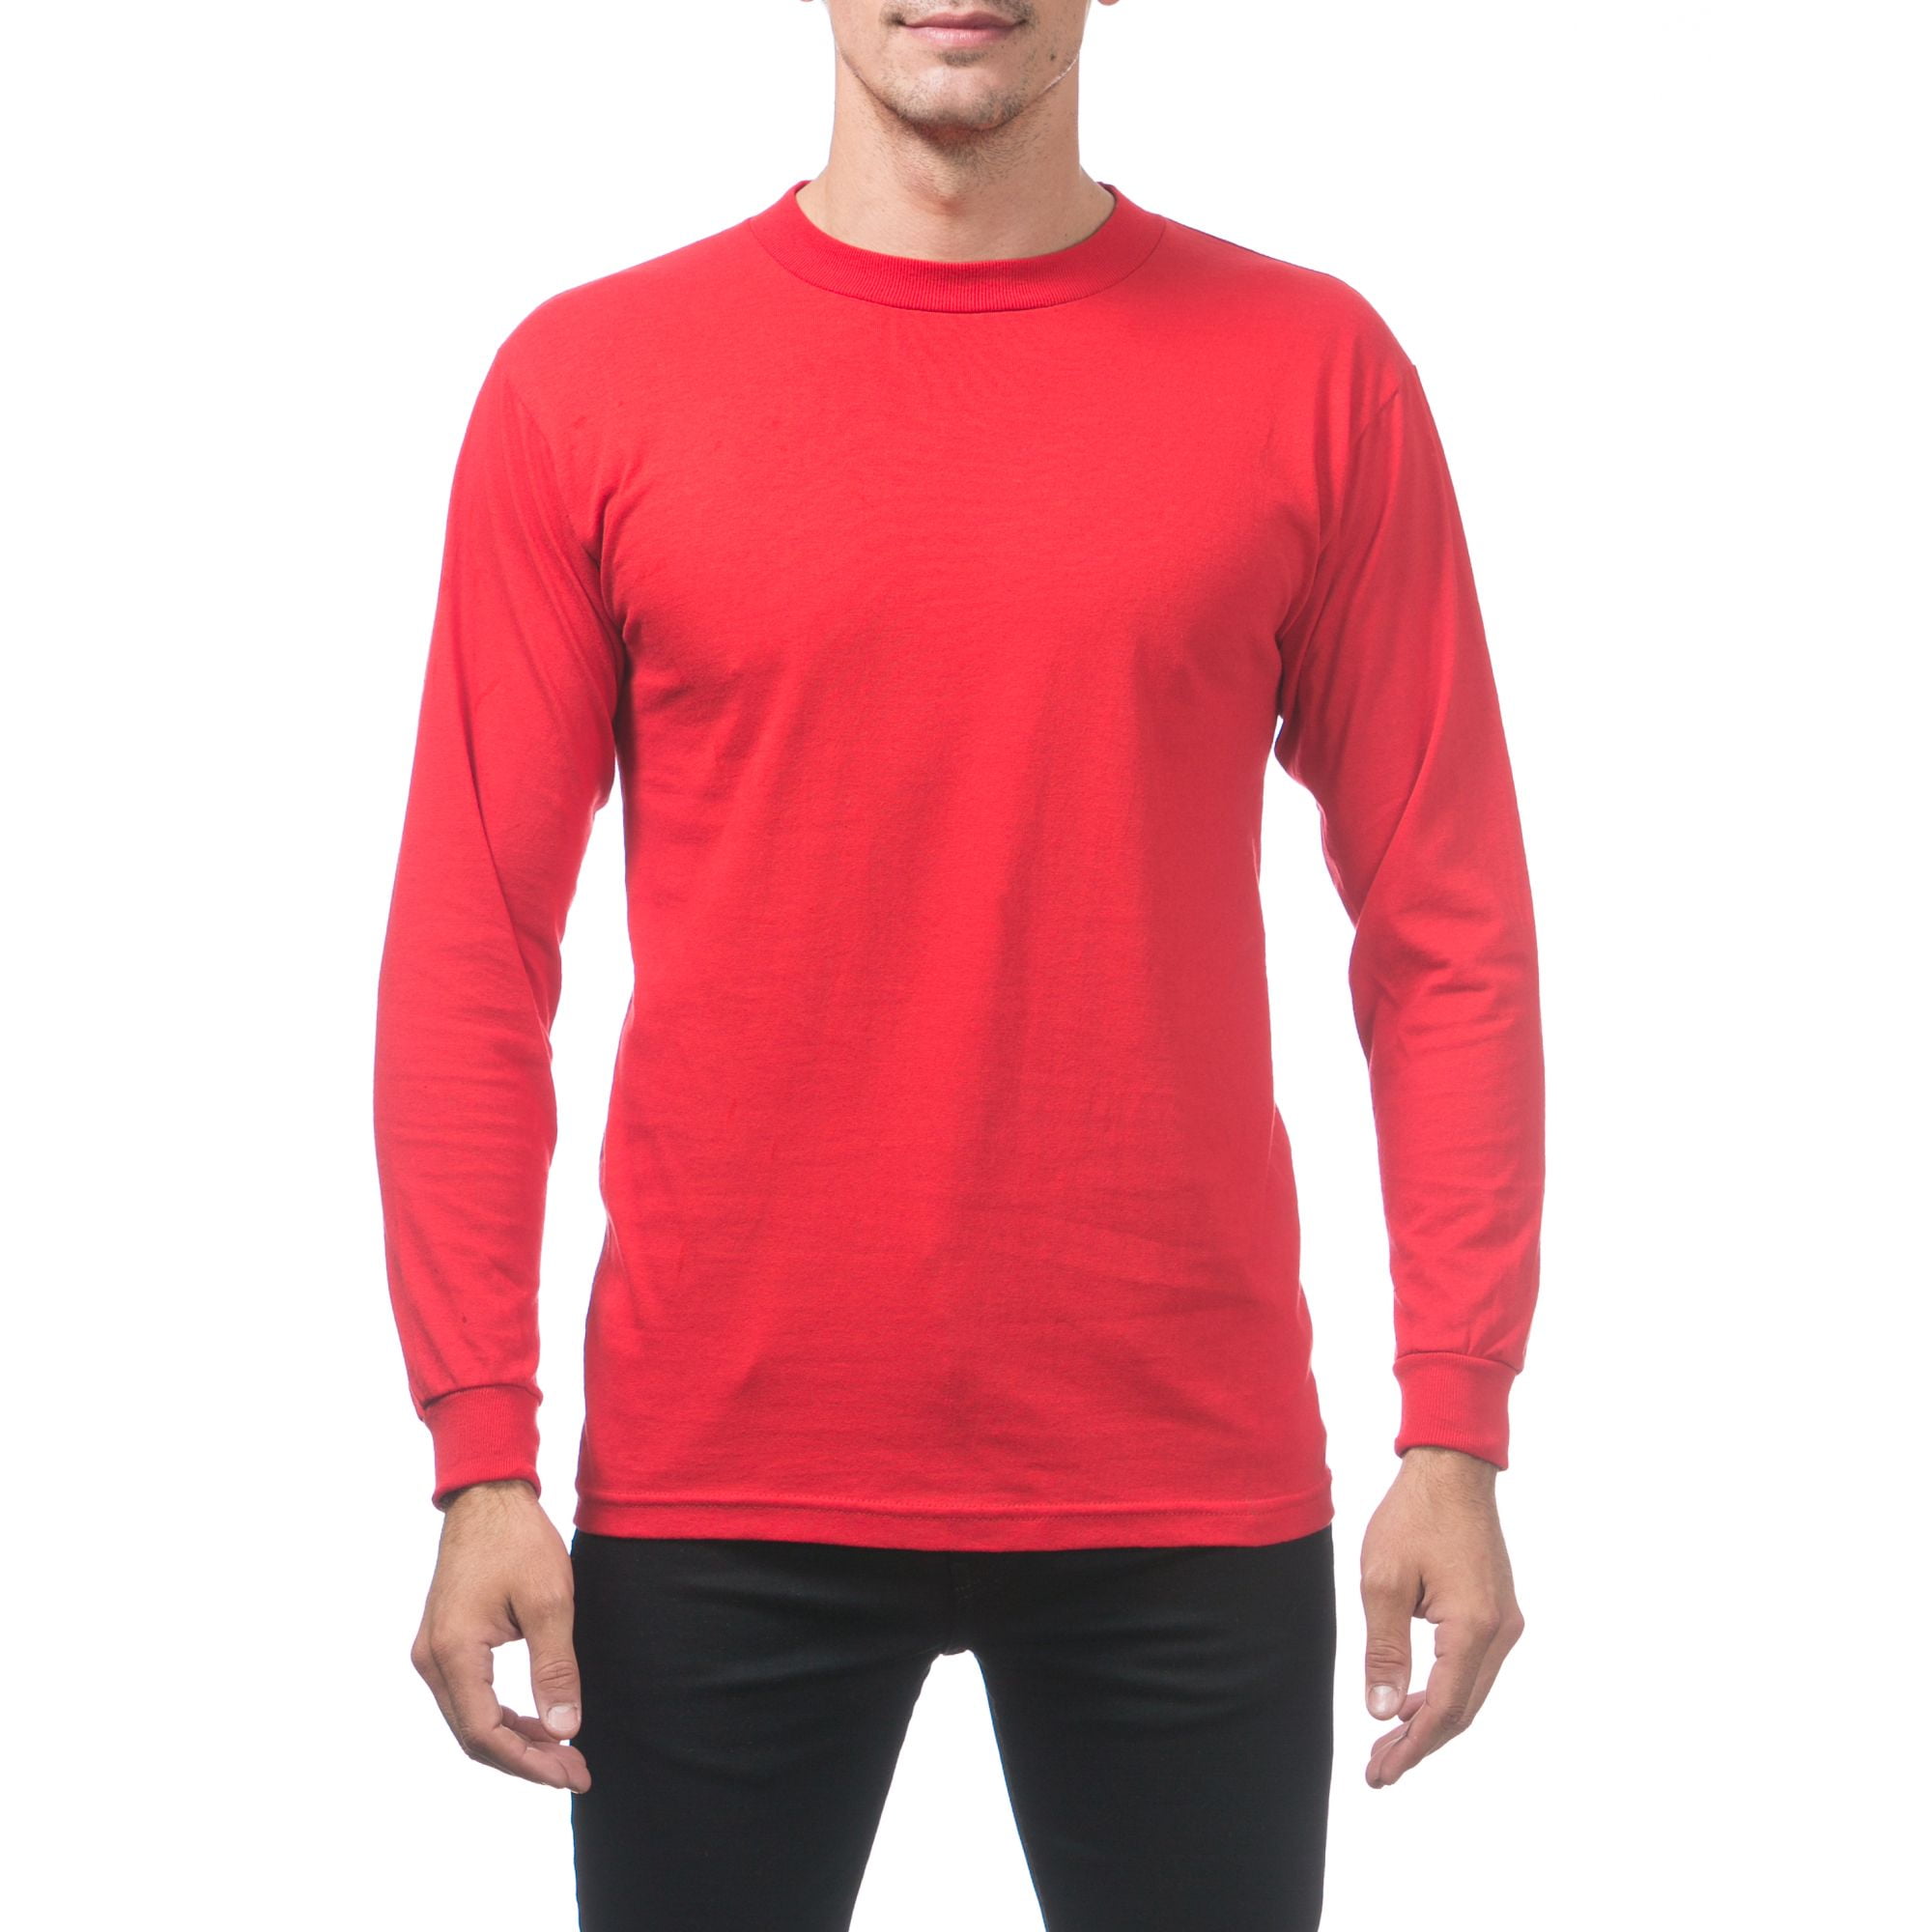 long red t shirt